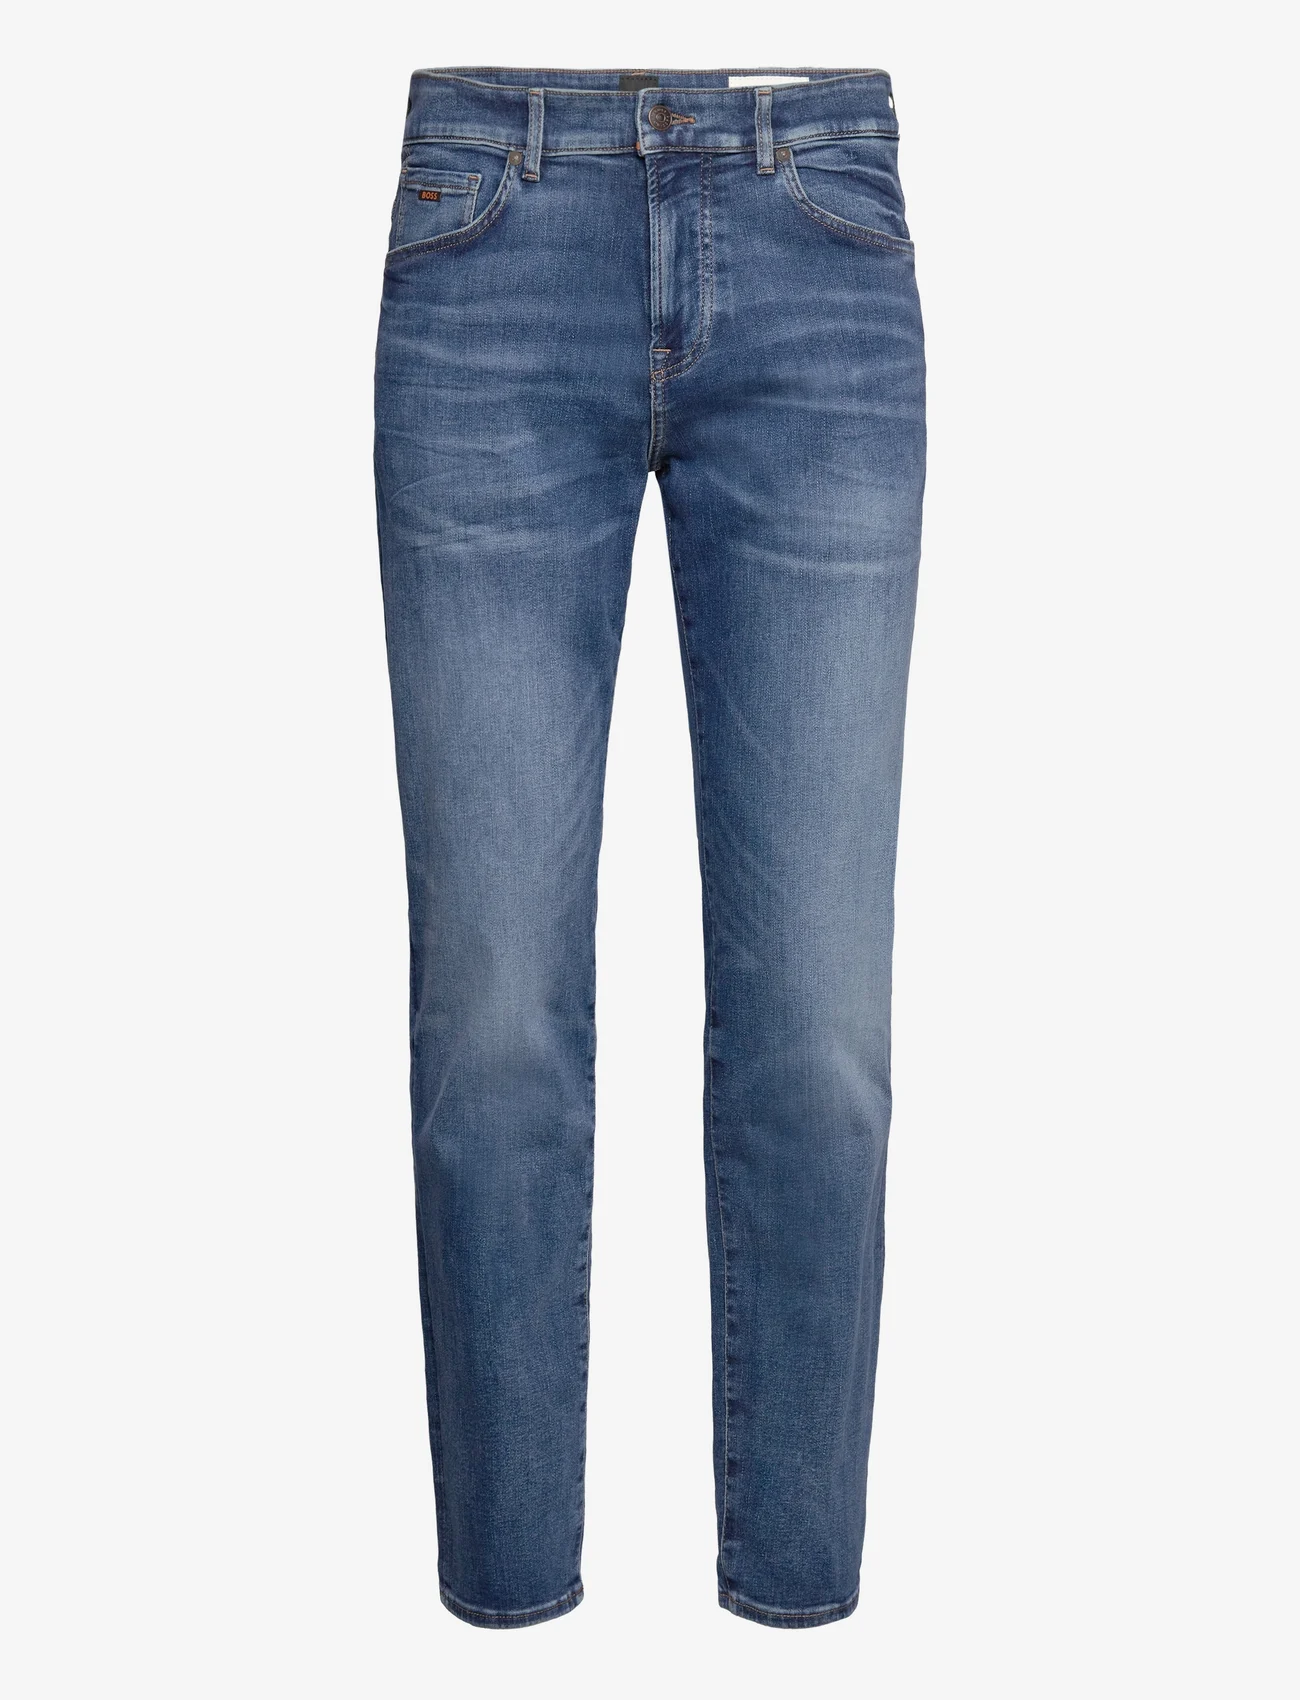 BOSS - Re.Maine BC - regular jeans - medium blue - 0